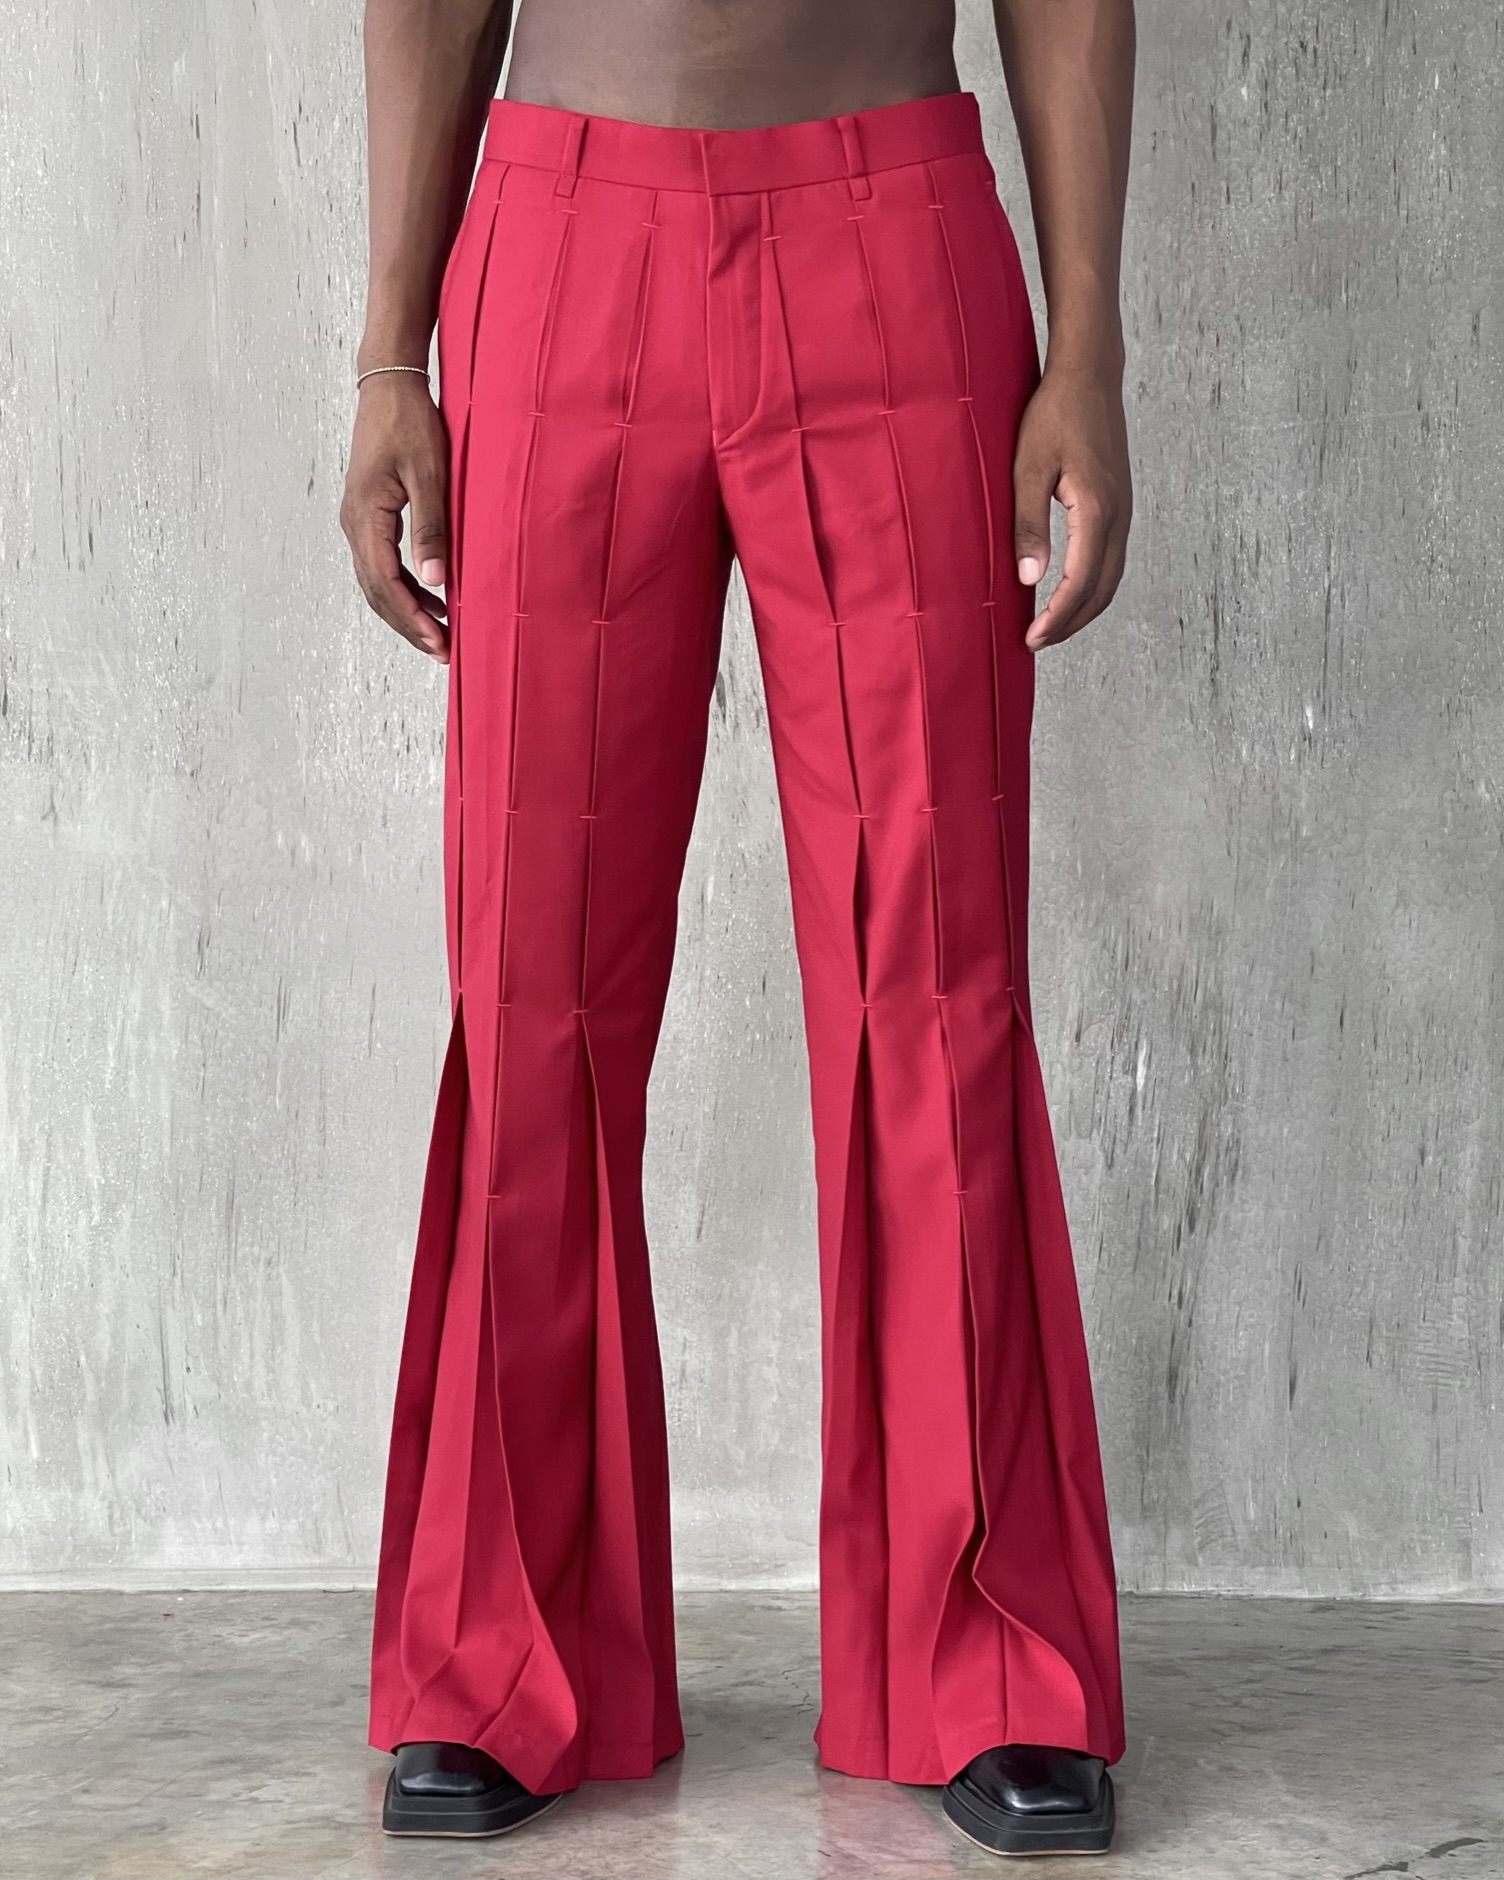 Victoria Beckham on Instagram: “My favourite #VBPreSS19 look - red tailored  wide leg trouser… | Ideias fashion, Moda de roupas de outono, Moda  inspirada nos anos 70